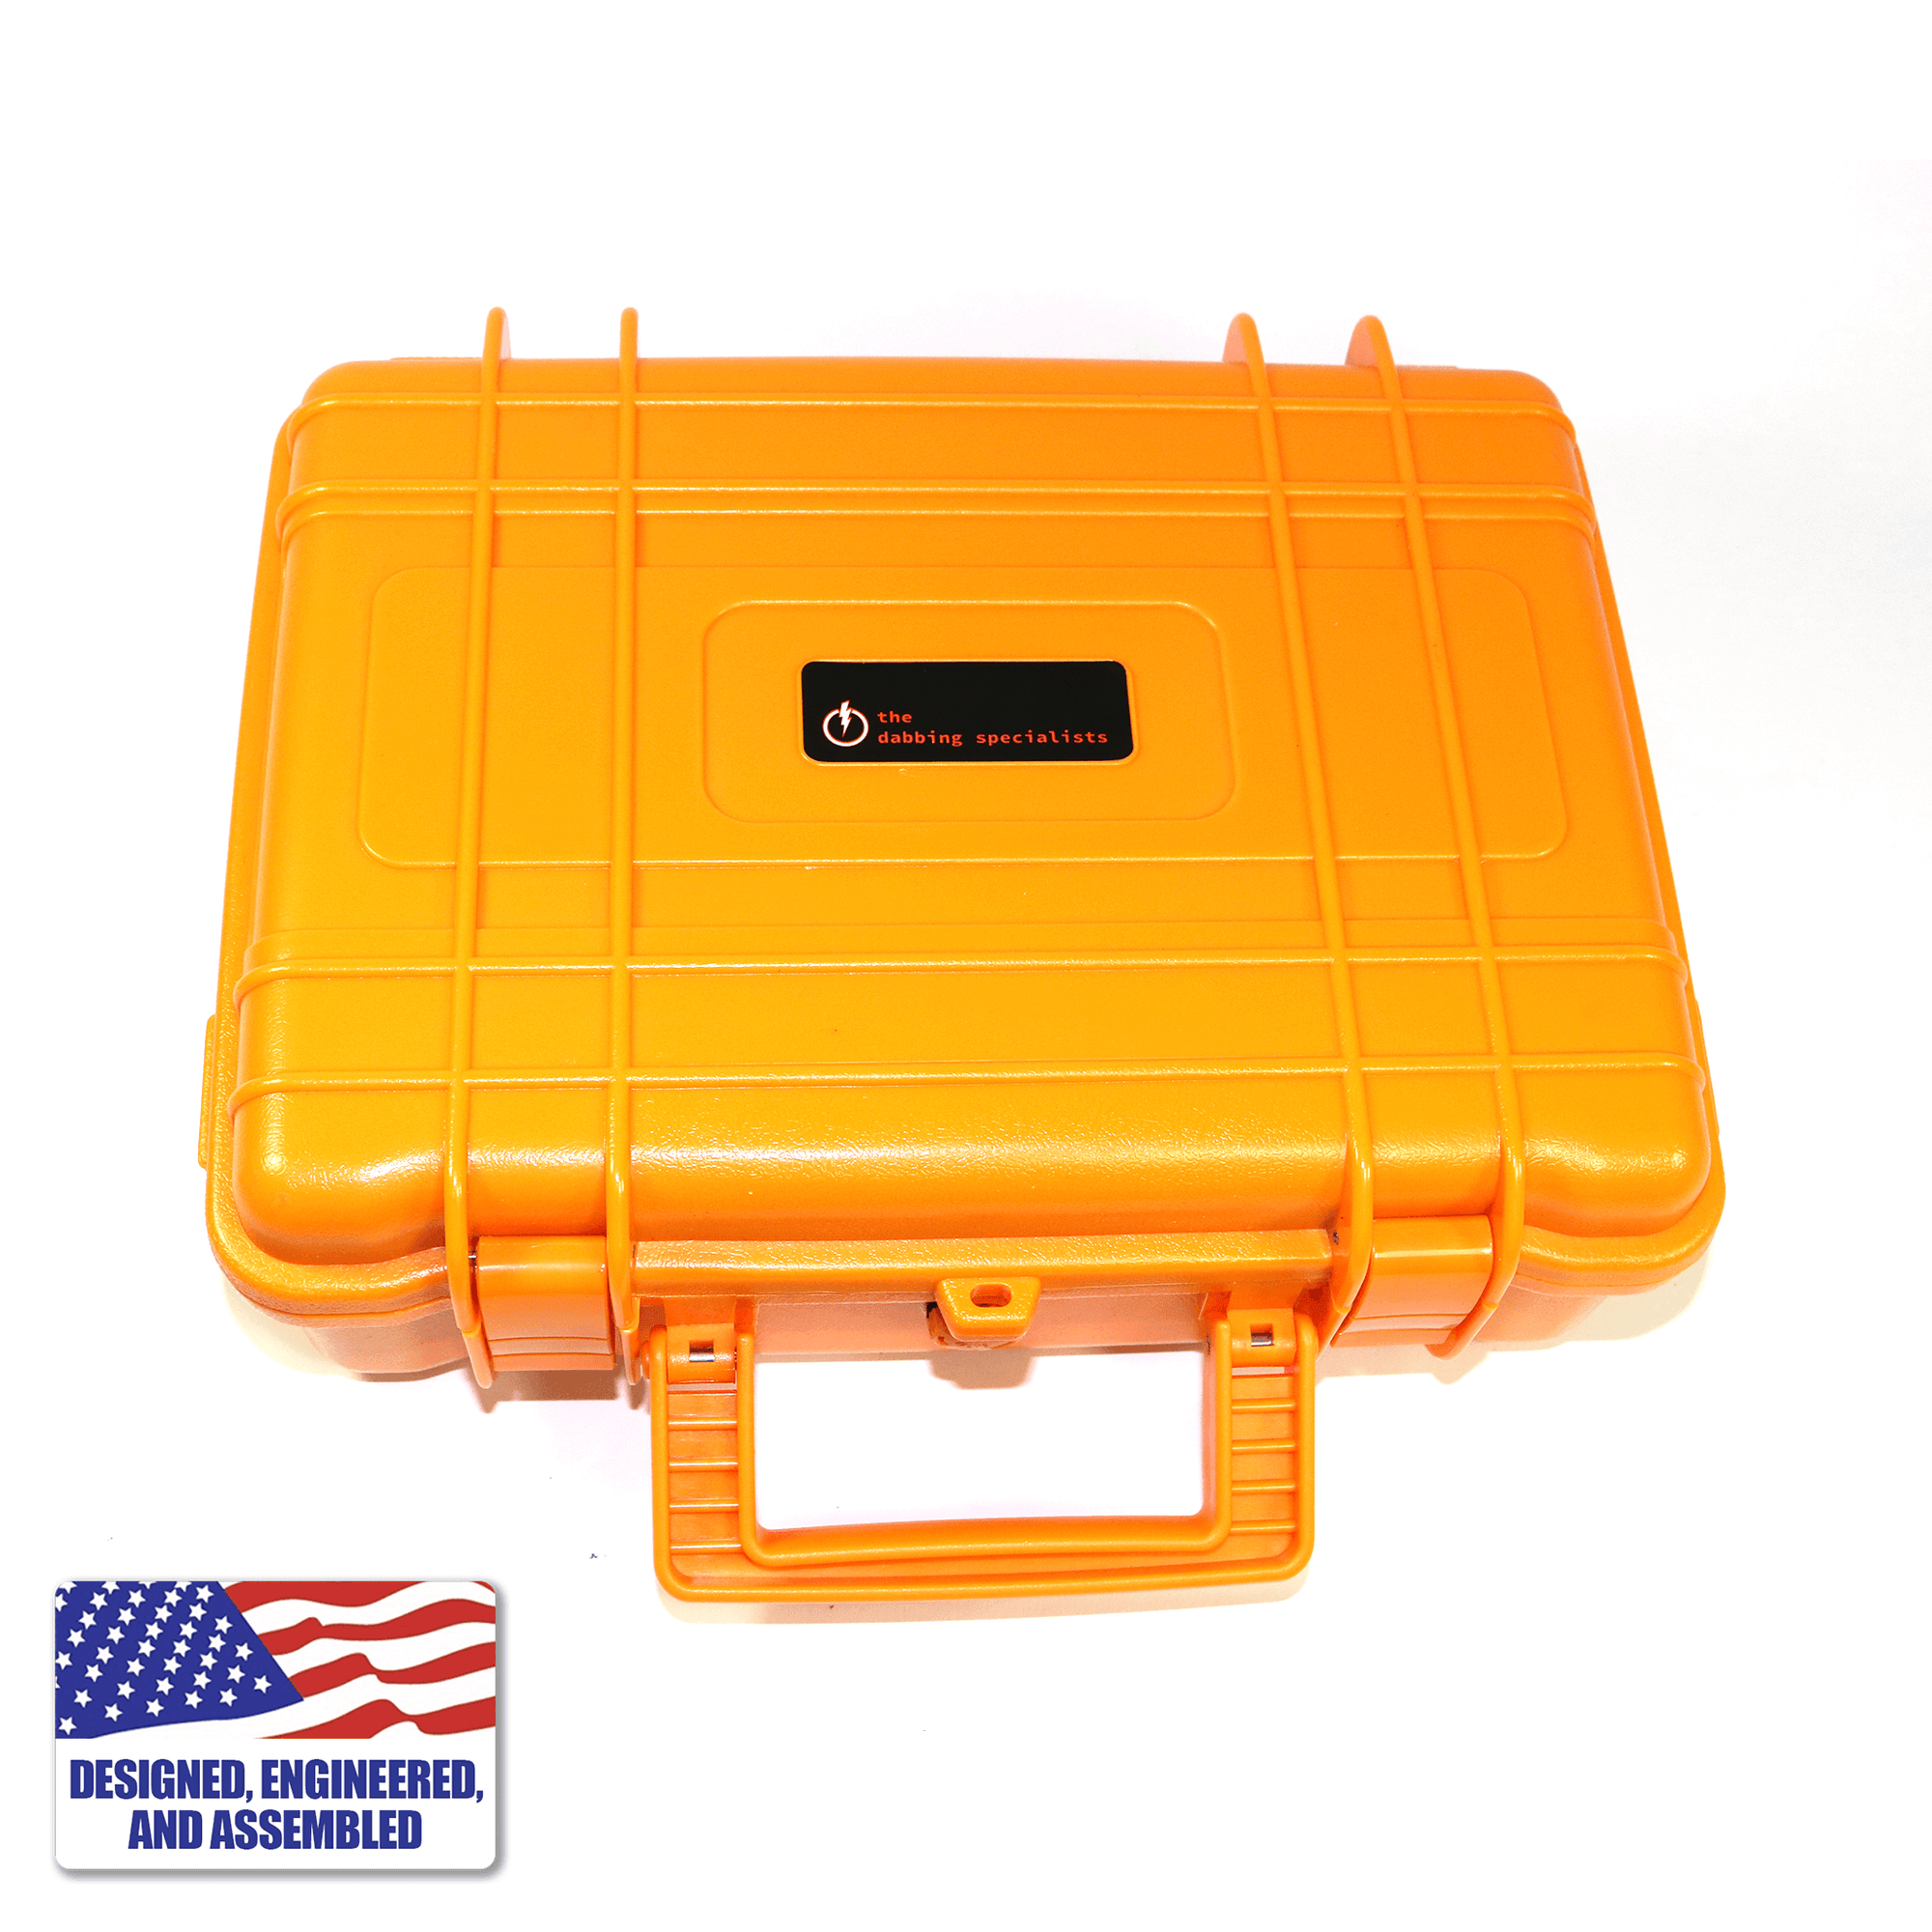 Portable Enail Case in Orange - Top View